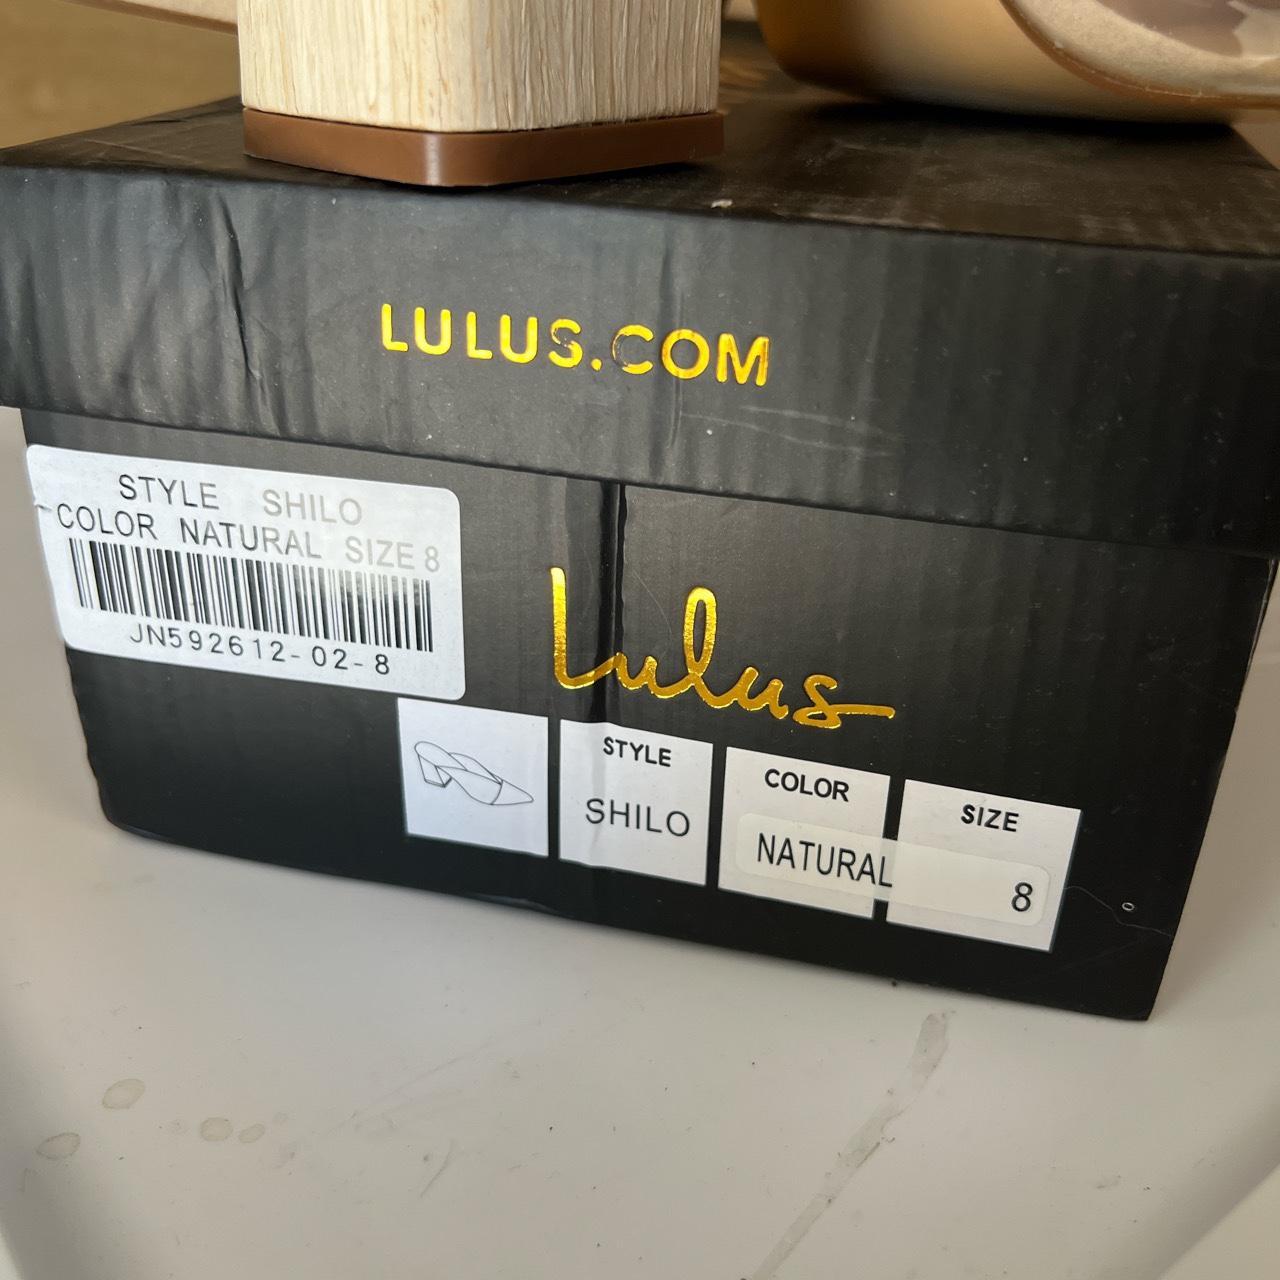 Lulus Women's Pumps - Cream - US 8